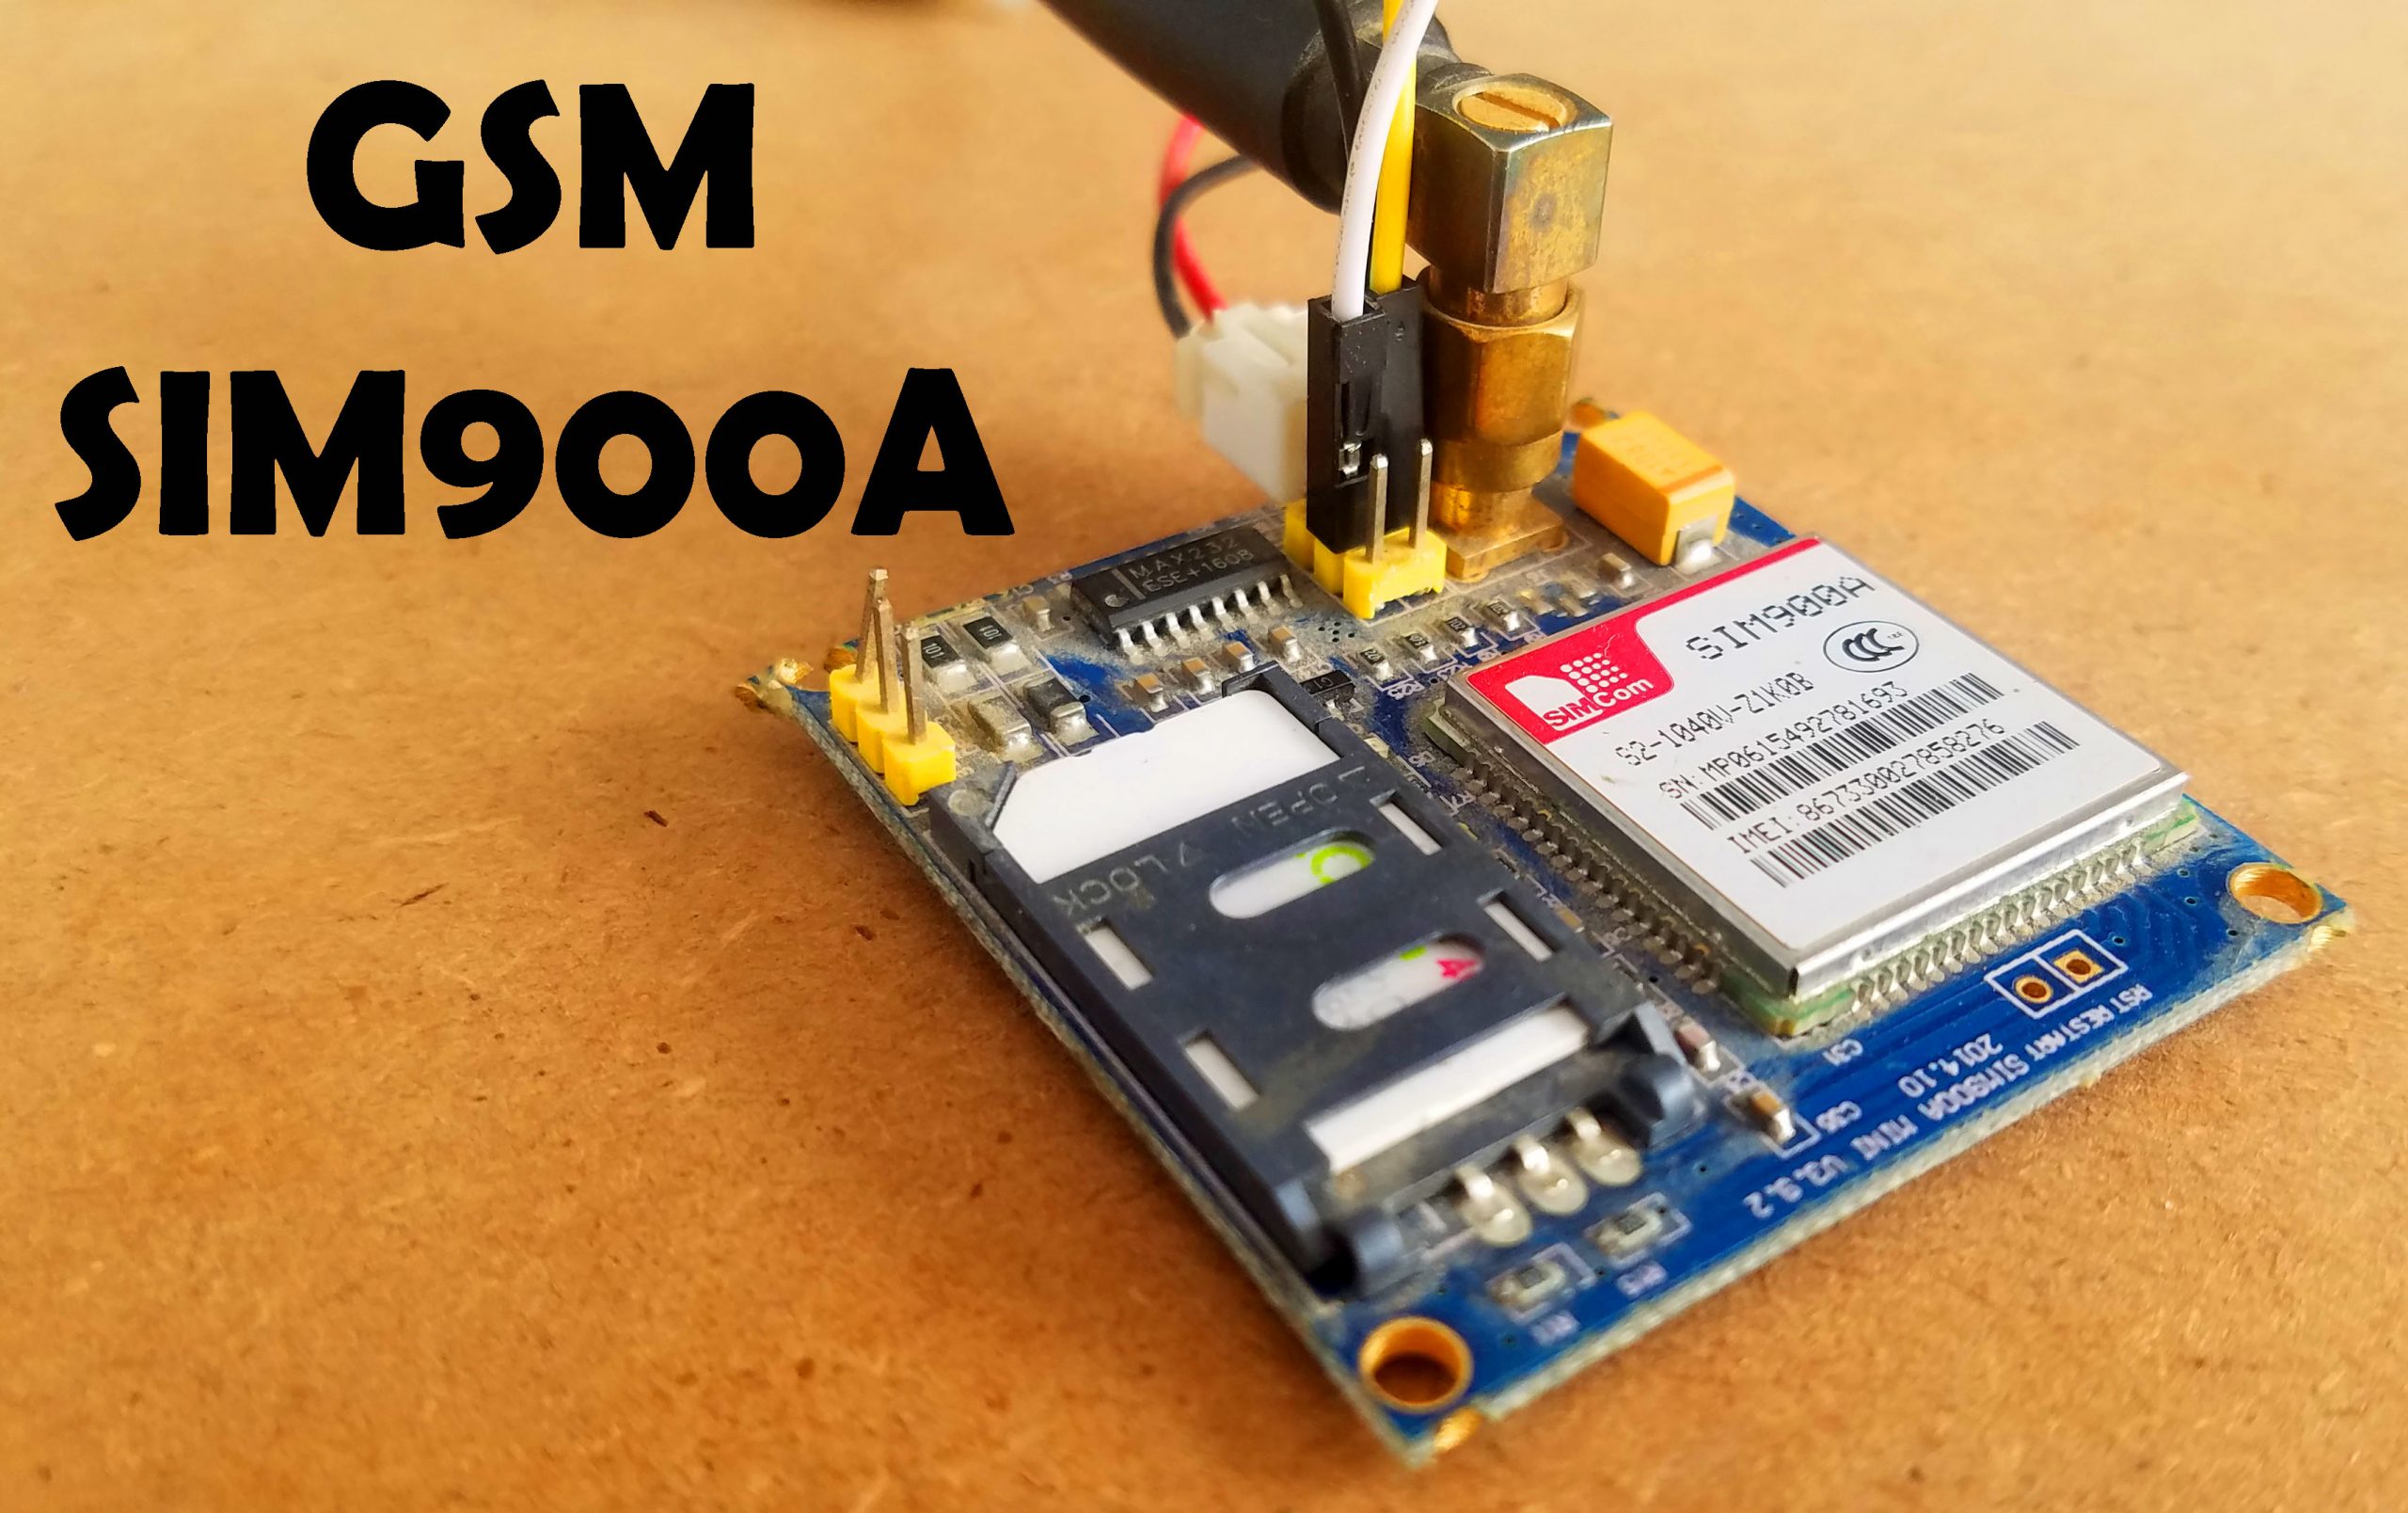 GSM Sim900A